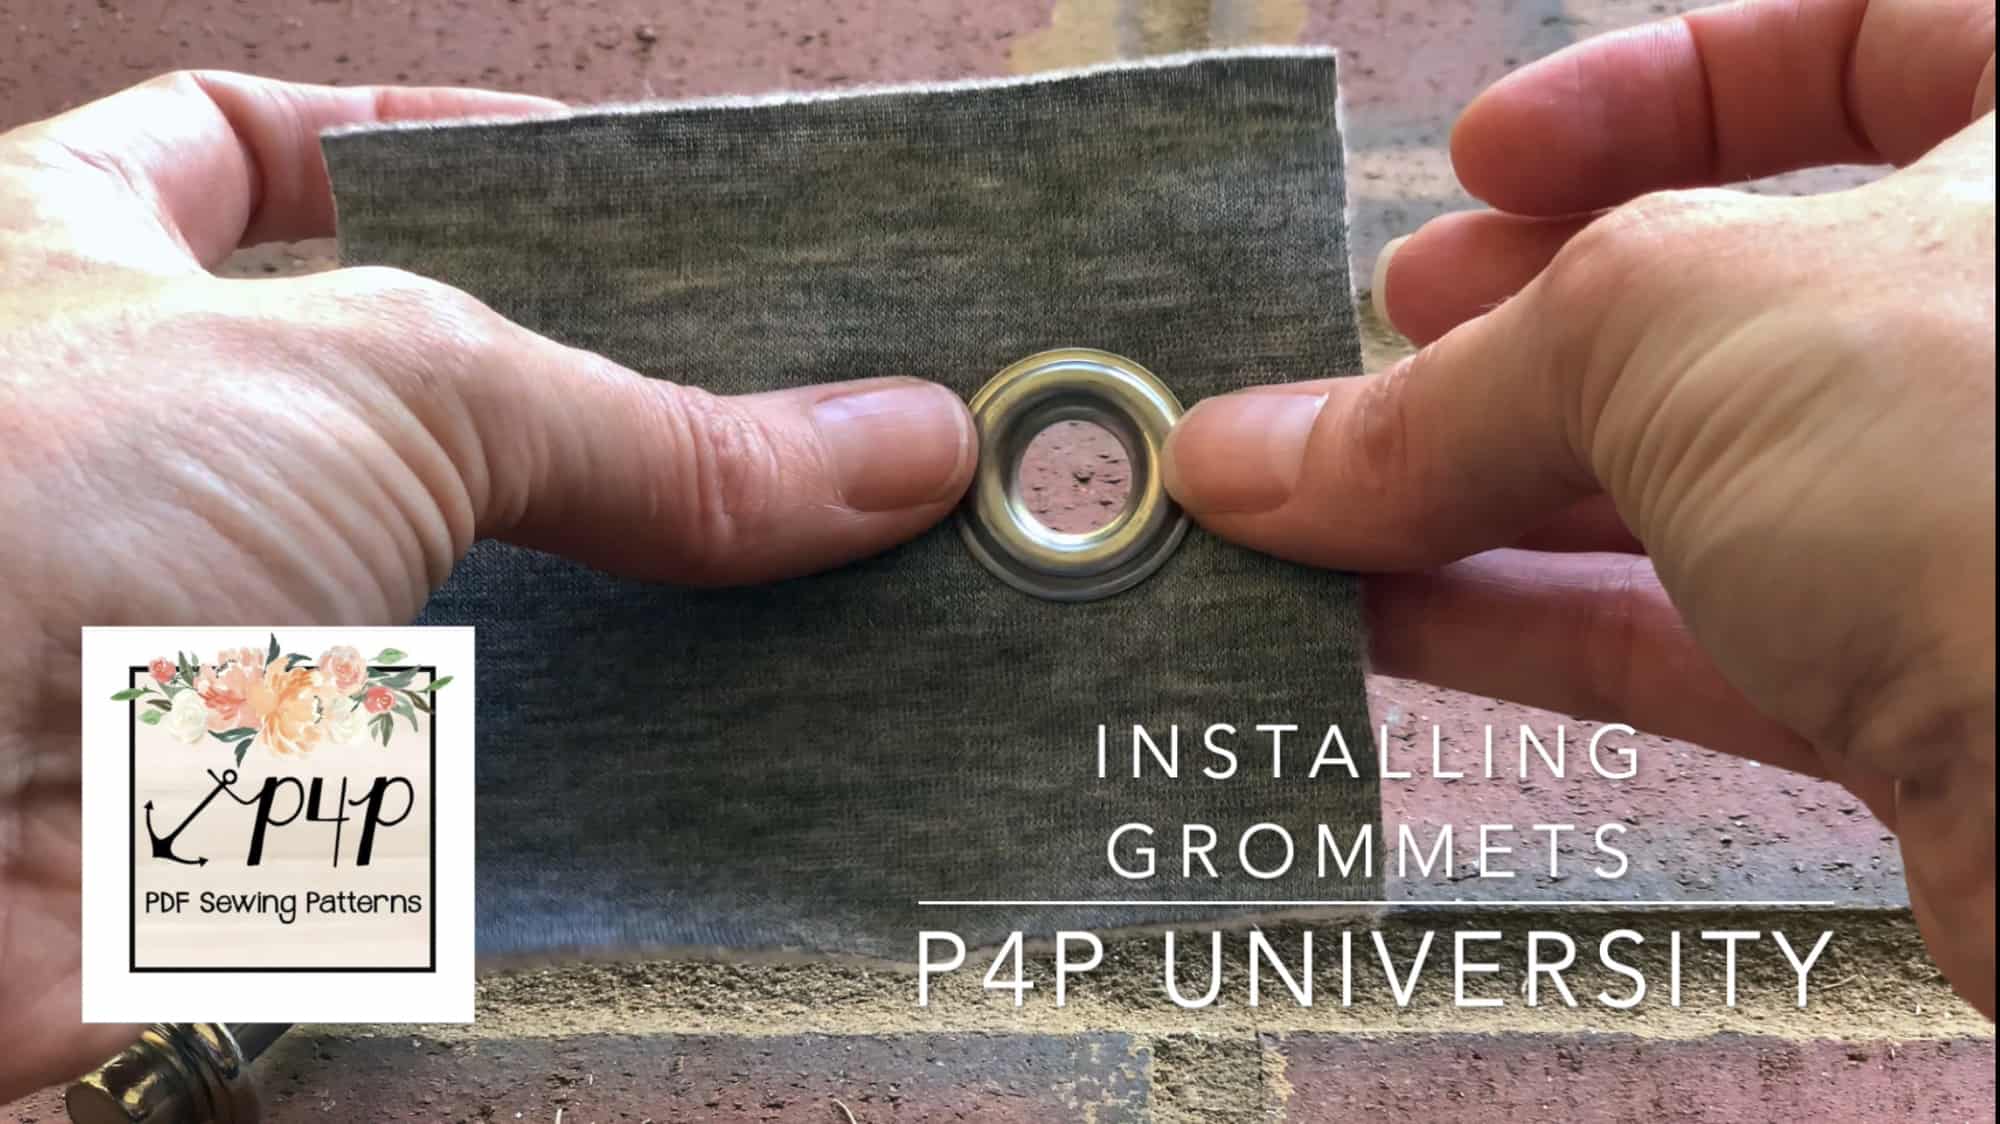 P4P University - Grommets - Patterns for Pirates